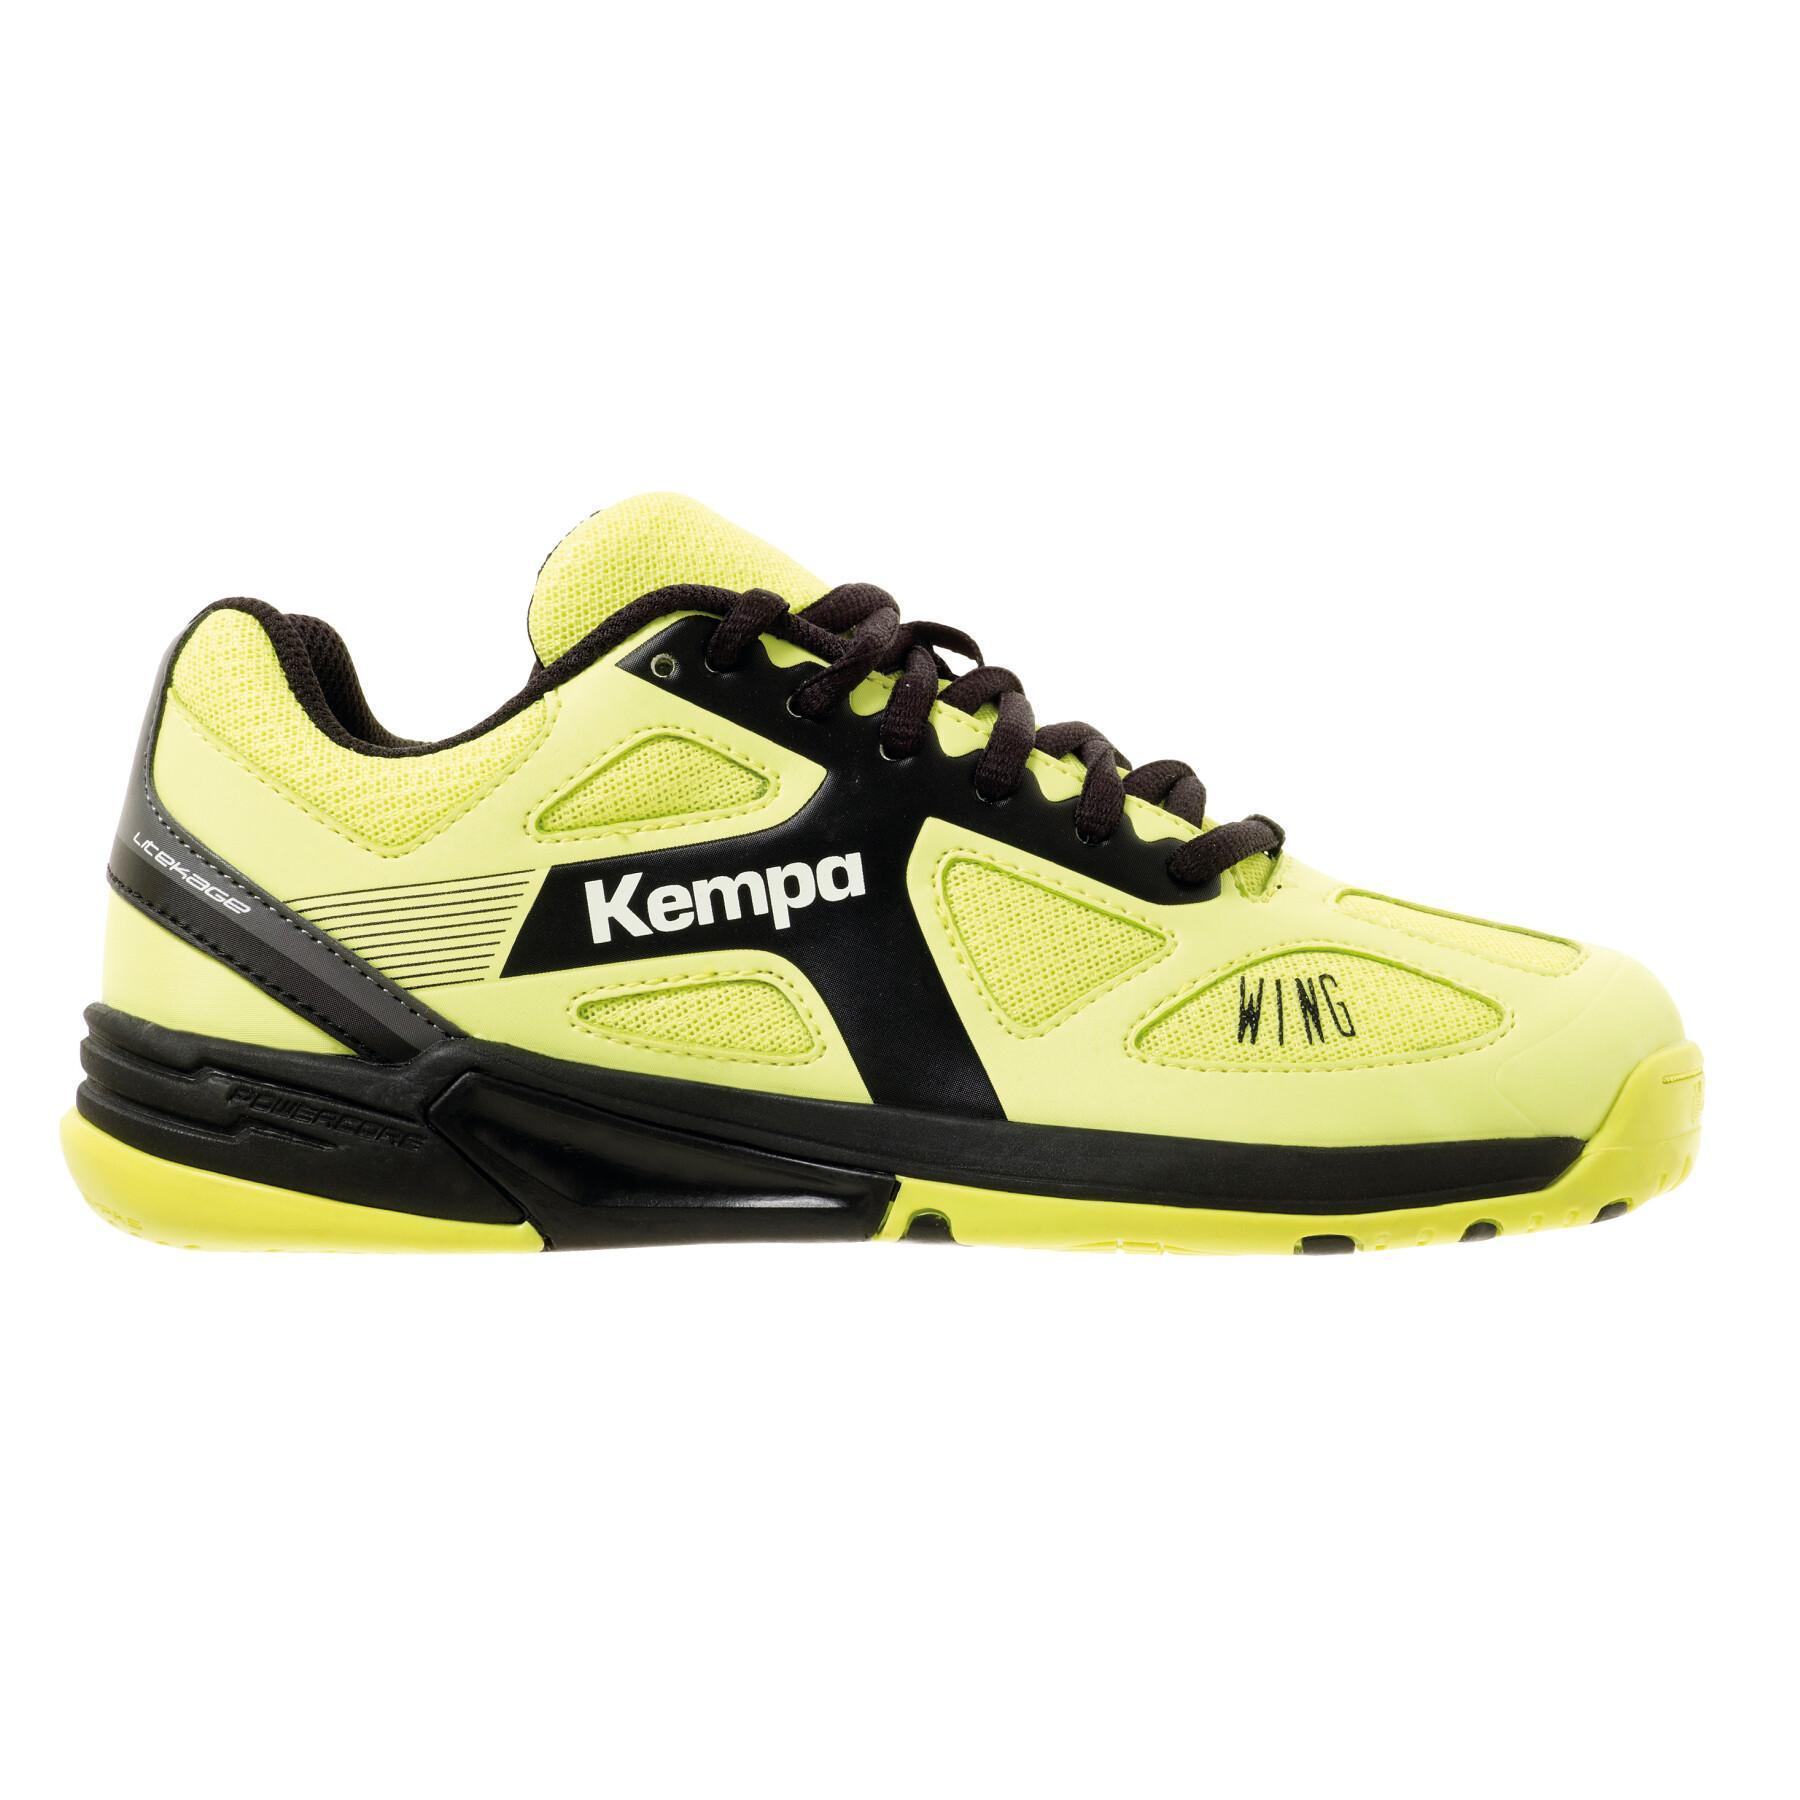 Children's shoes Kempa Wing Caution